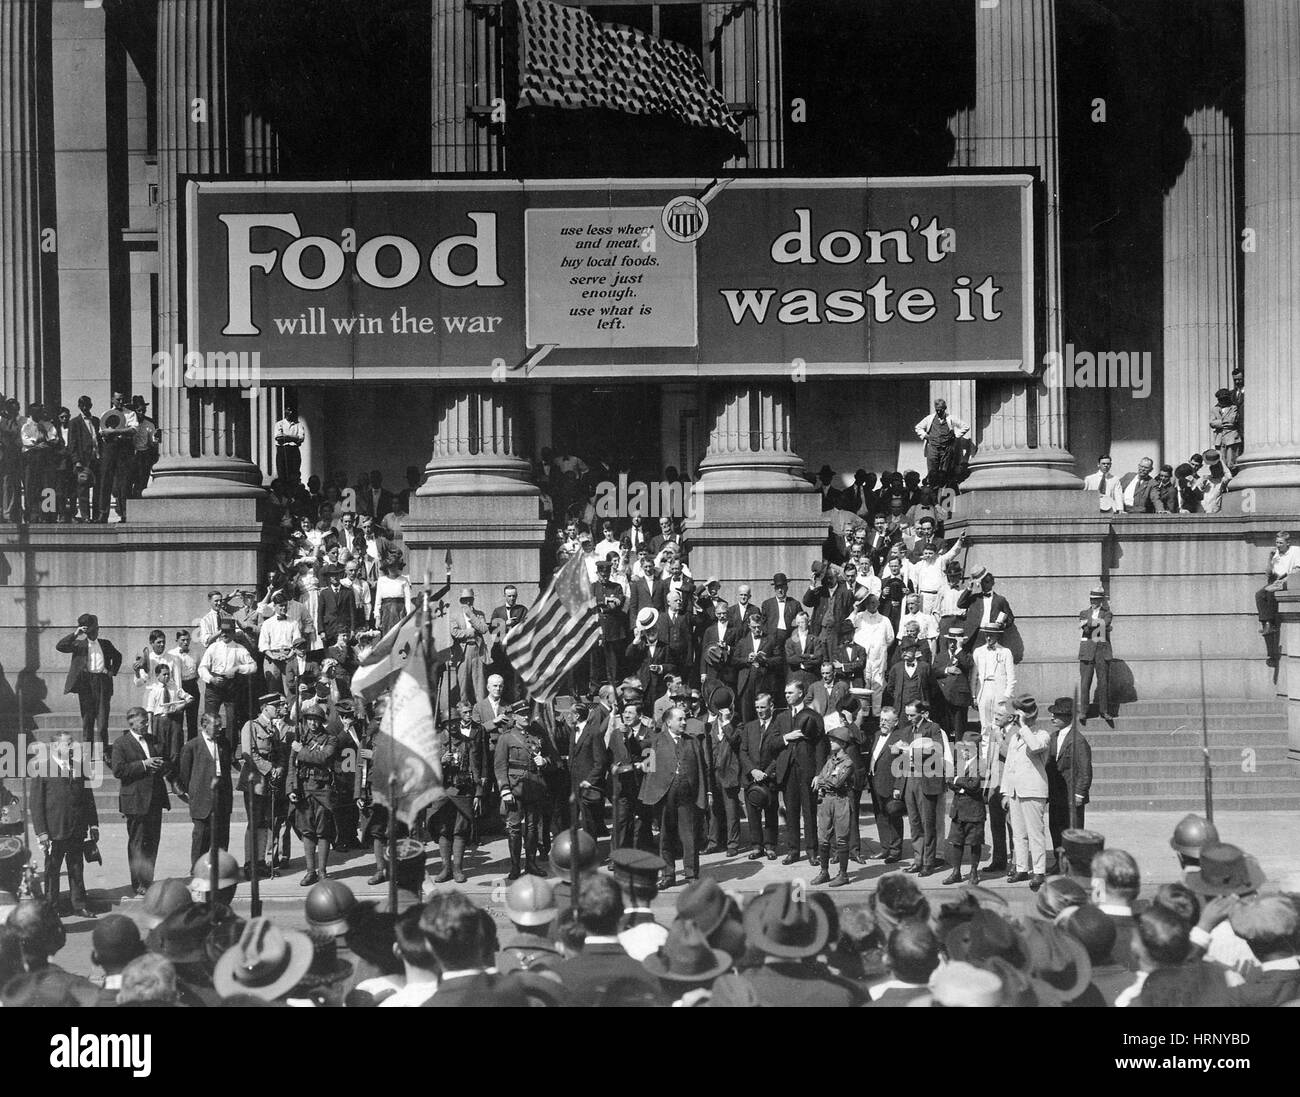 WWI, 4th Liberty Loan Drive, 1918 Stock Photo